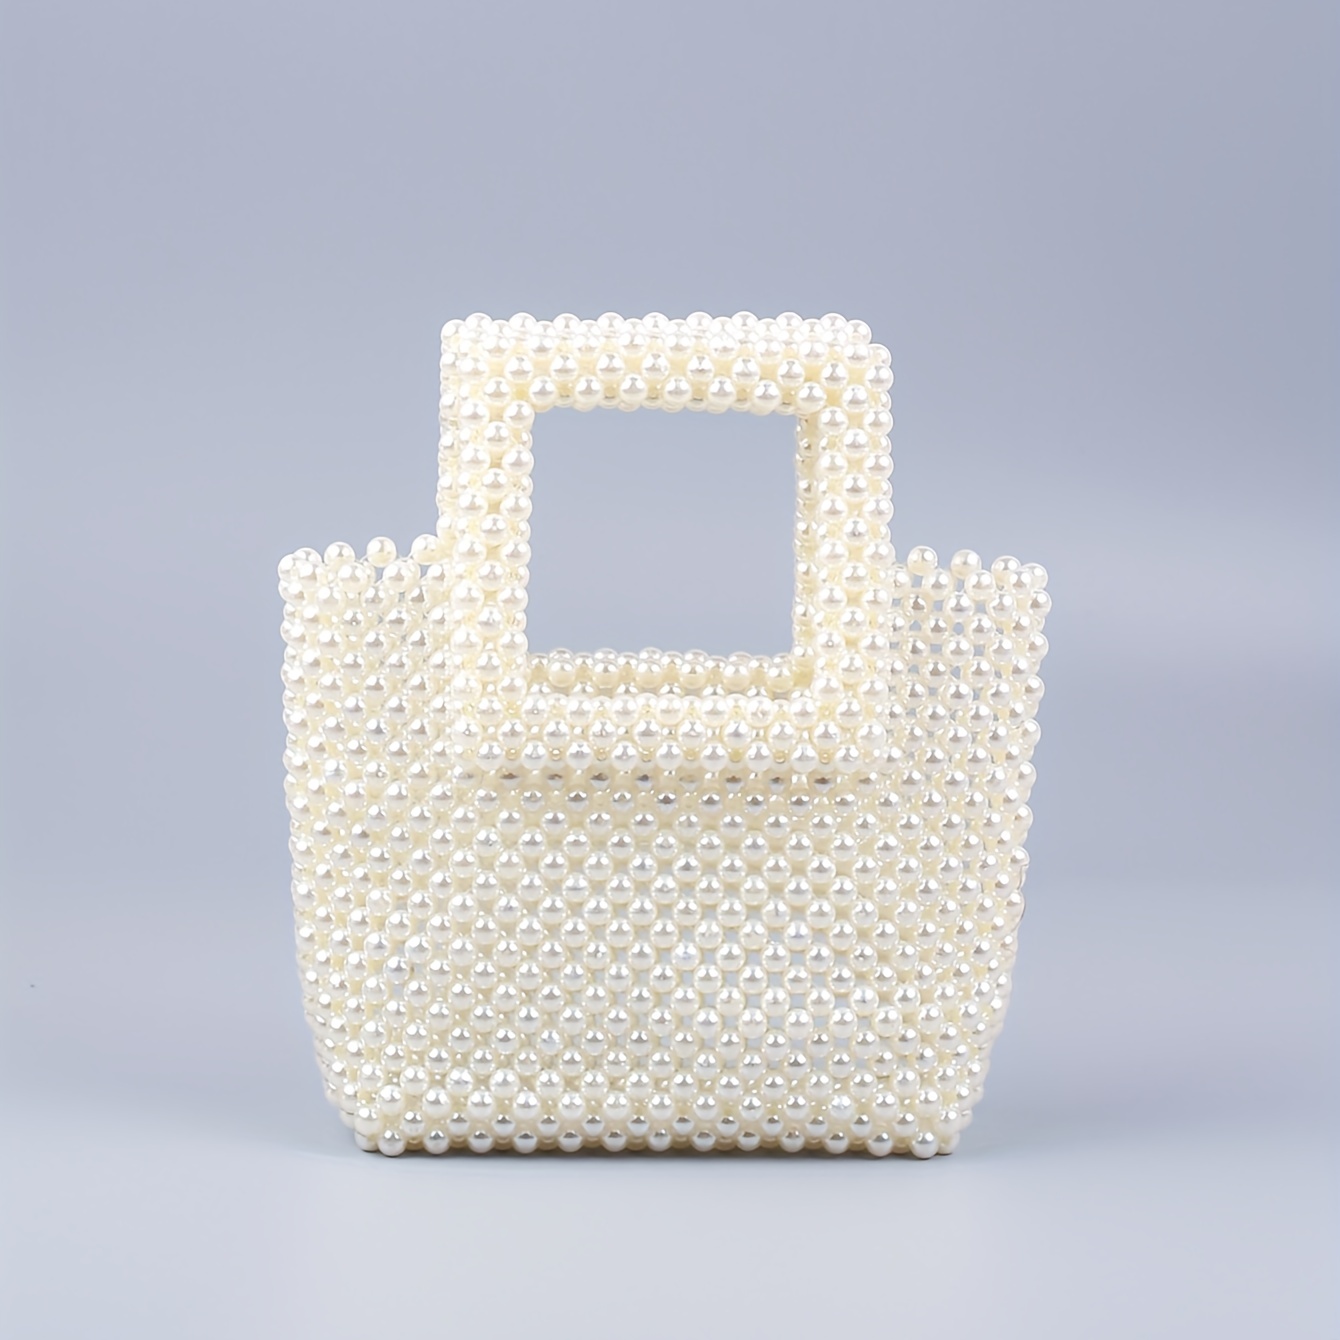 Faux Pearl Decor Evening Bag, Portable Top Handle Evening Bag, Elegant  Dinner Bag